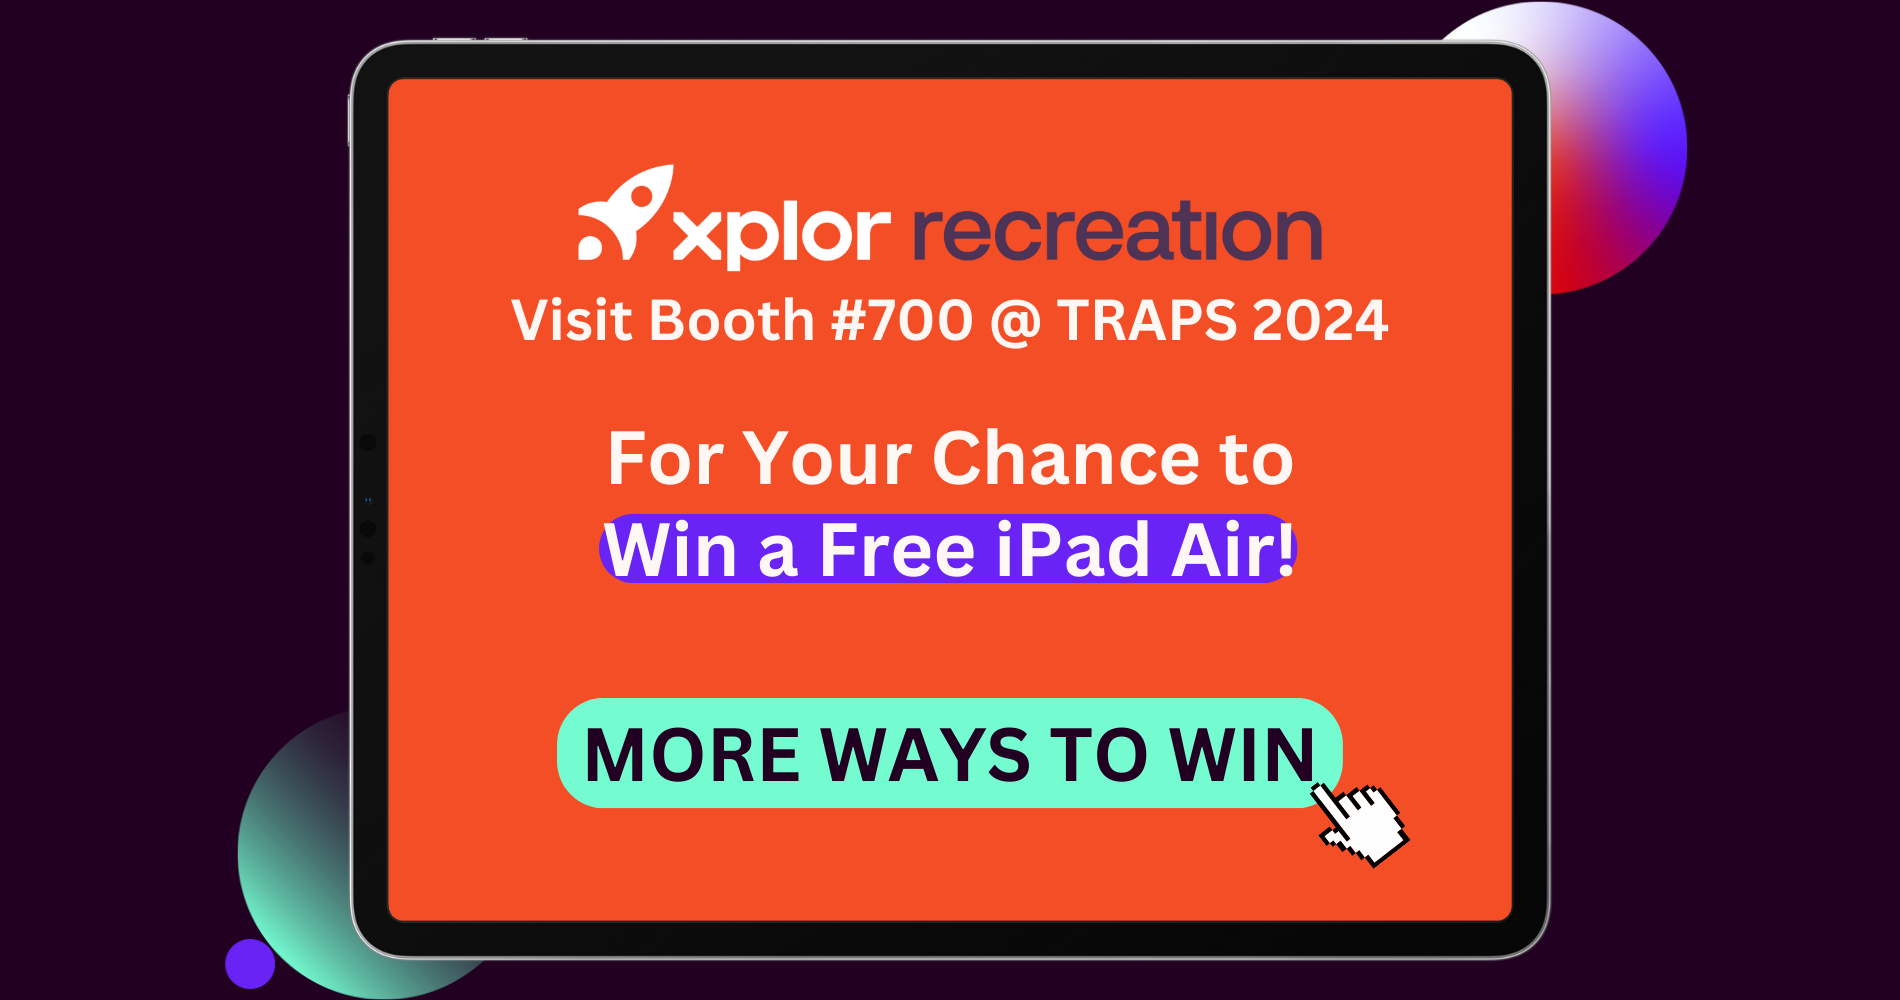 Xplor Recreations TRAPS 2024 conference iPad giveaway